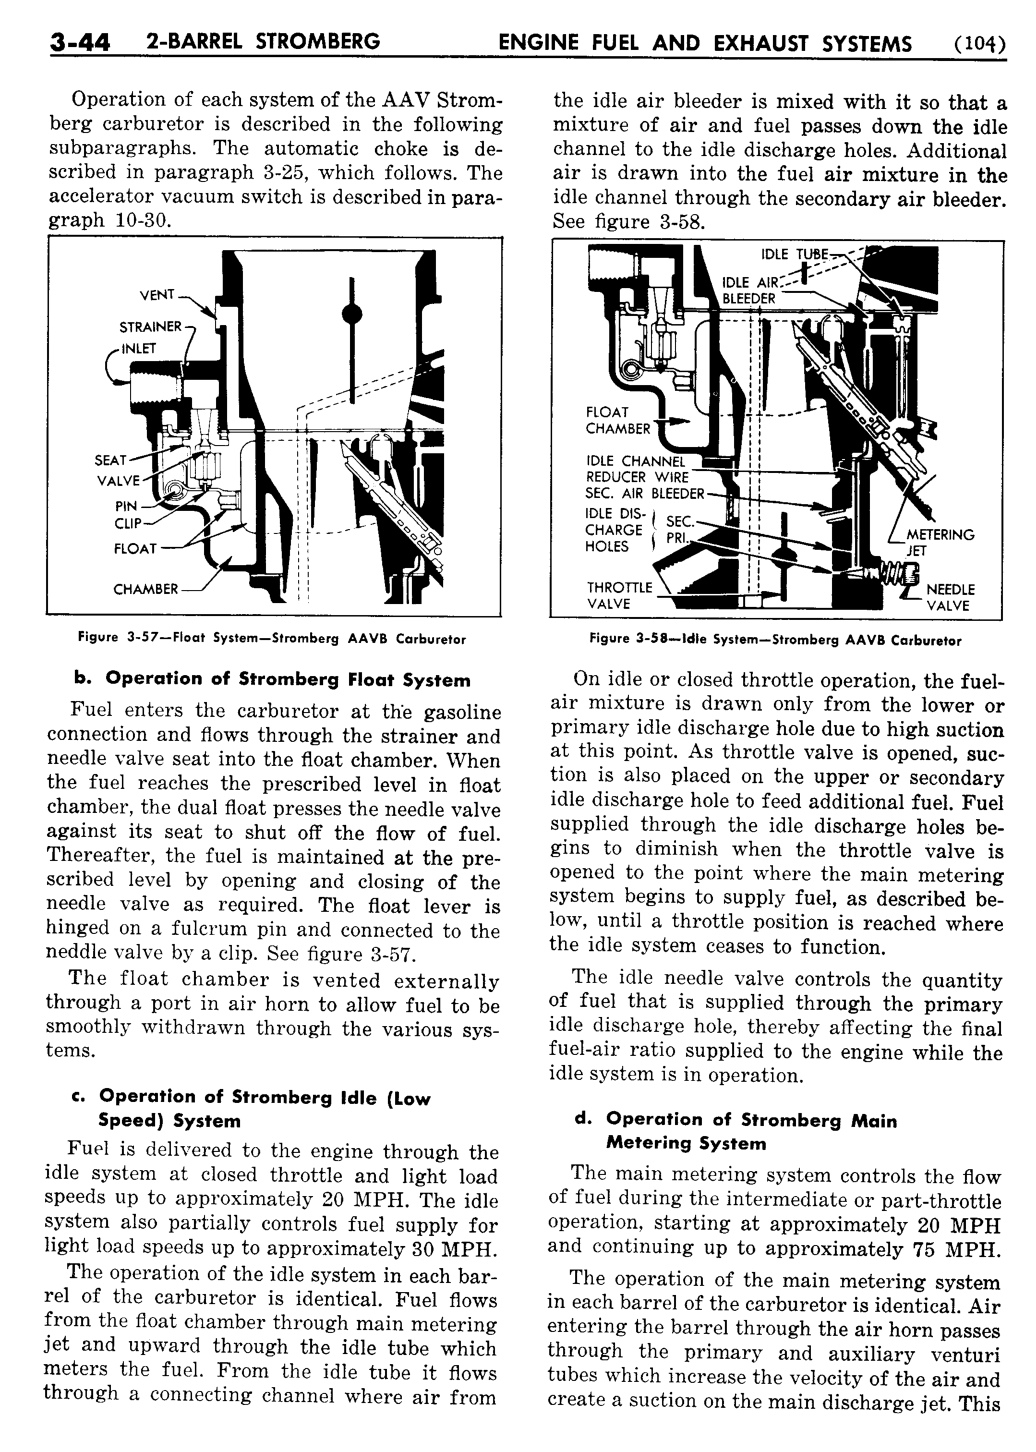 n_04 1955 Buick Shop Manual - Engine Fuel & Exhaust-044-044.jpg